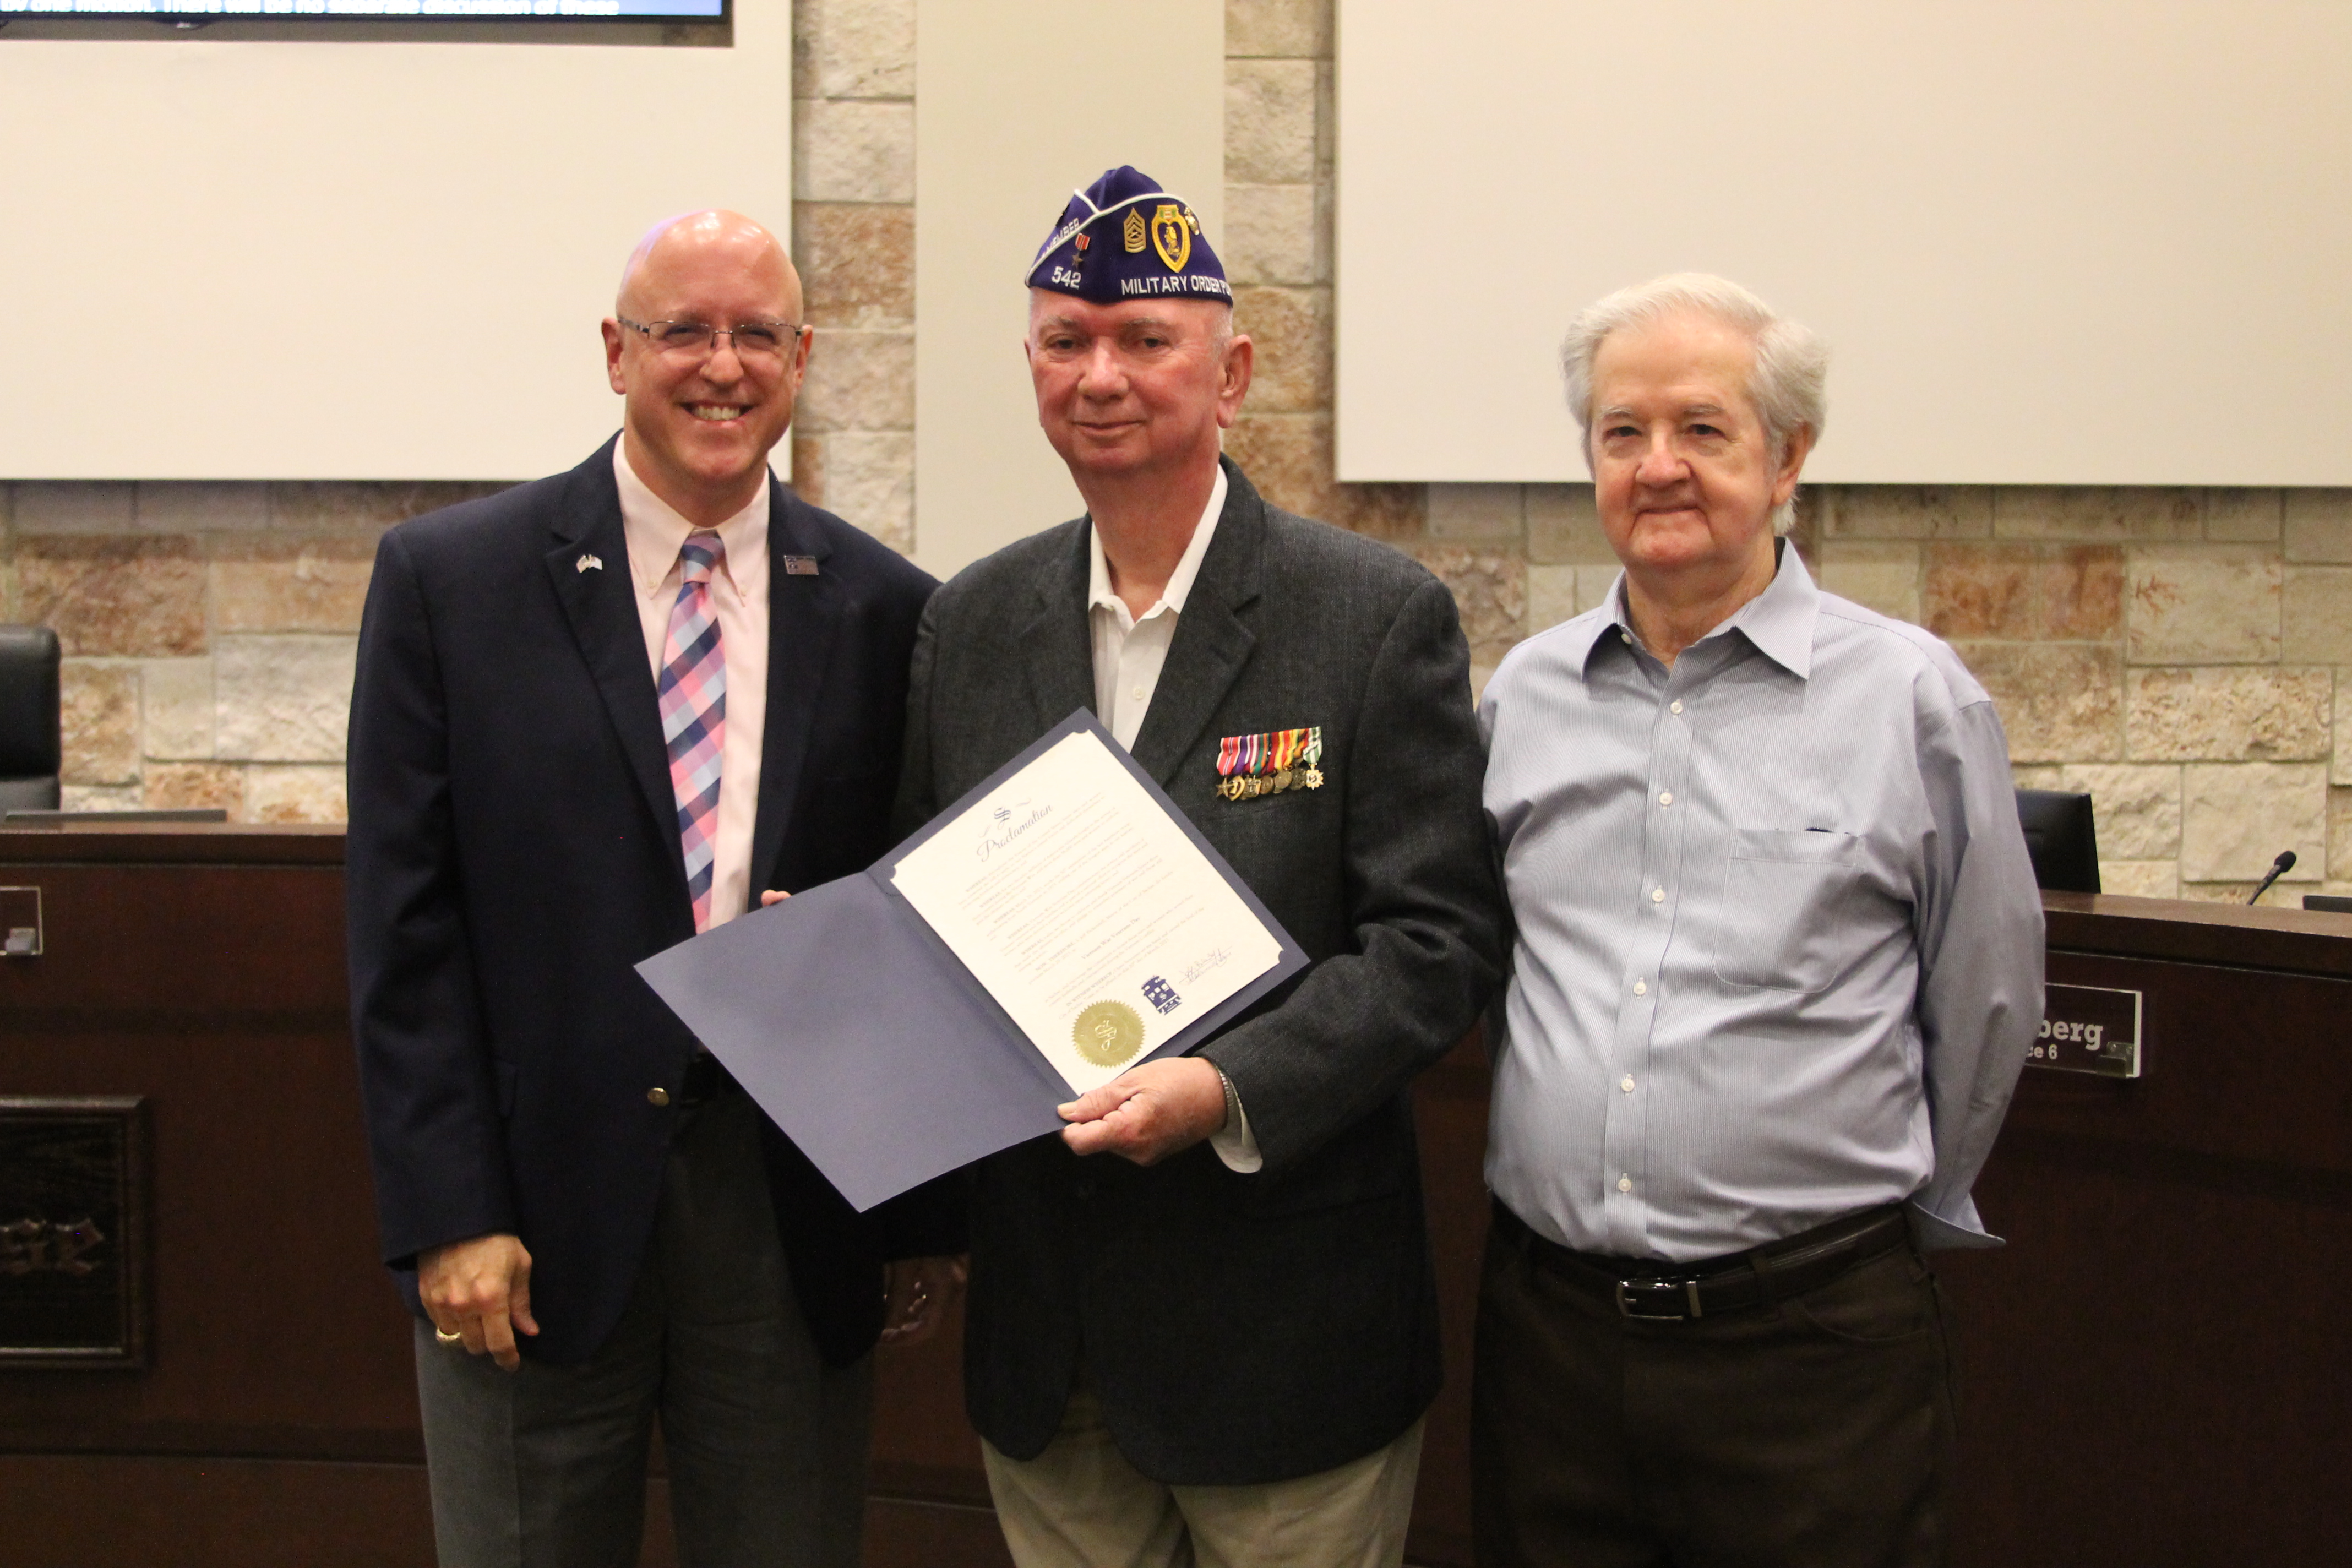 Staff present overview of rental protection program; council recognizes Vietnam veterans